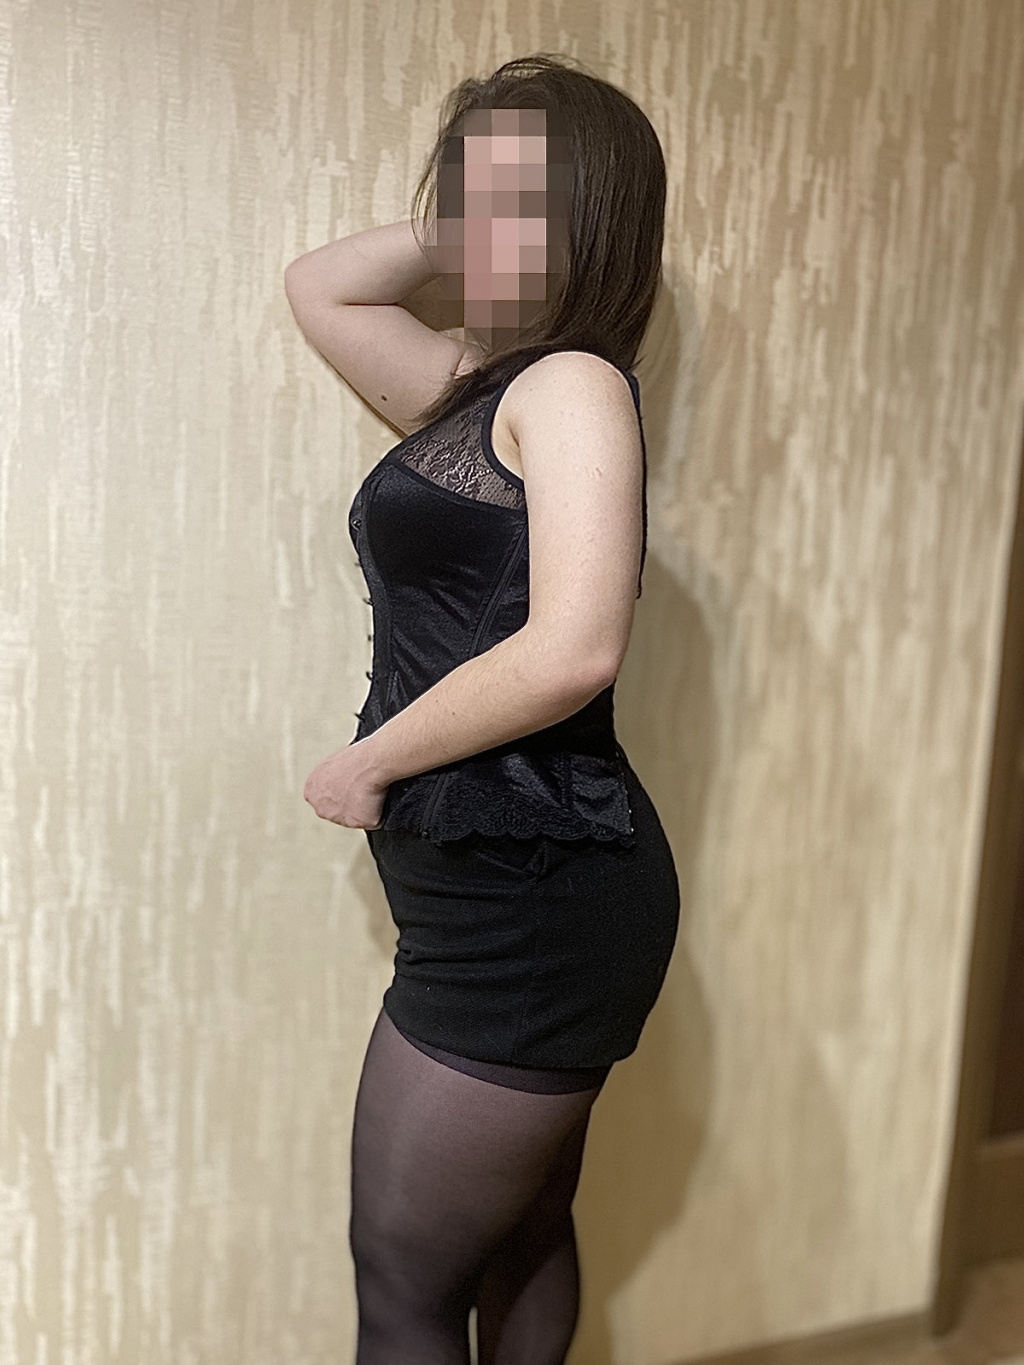 Ника New: Проститутка-индивидуалка в Воронеже